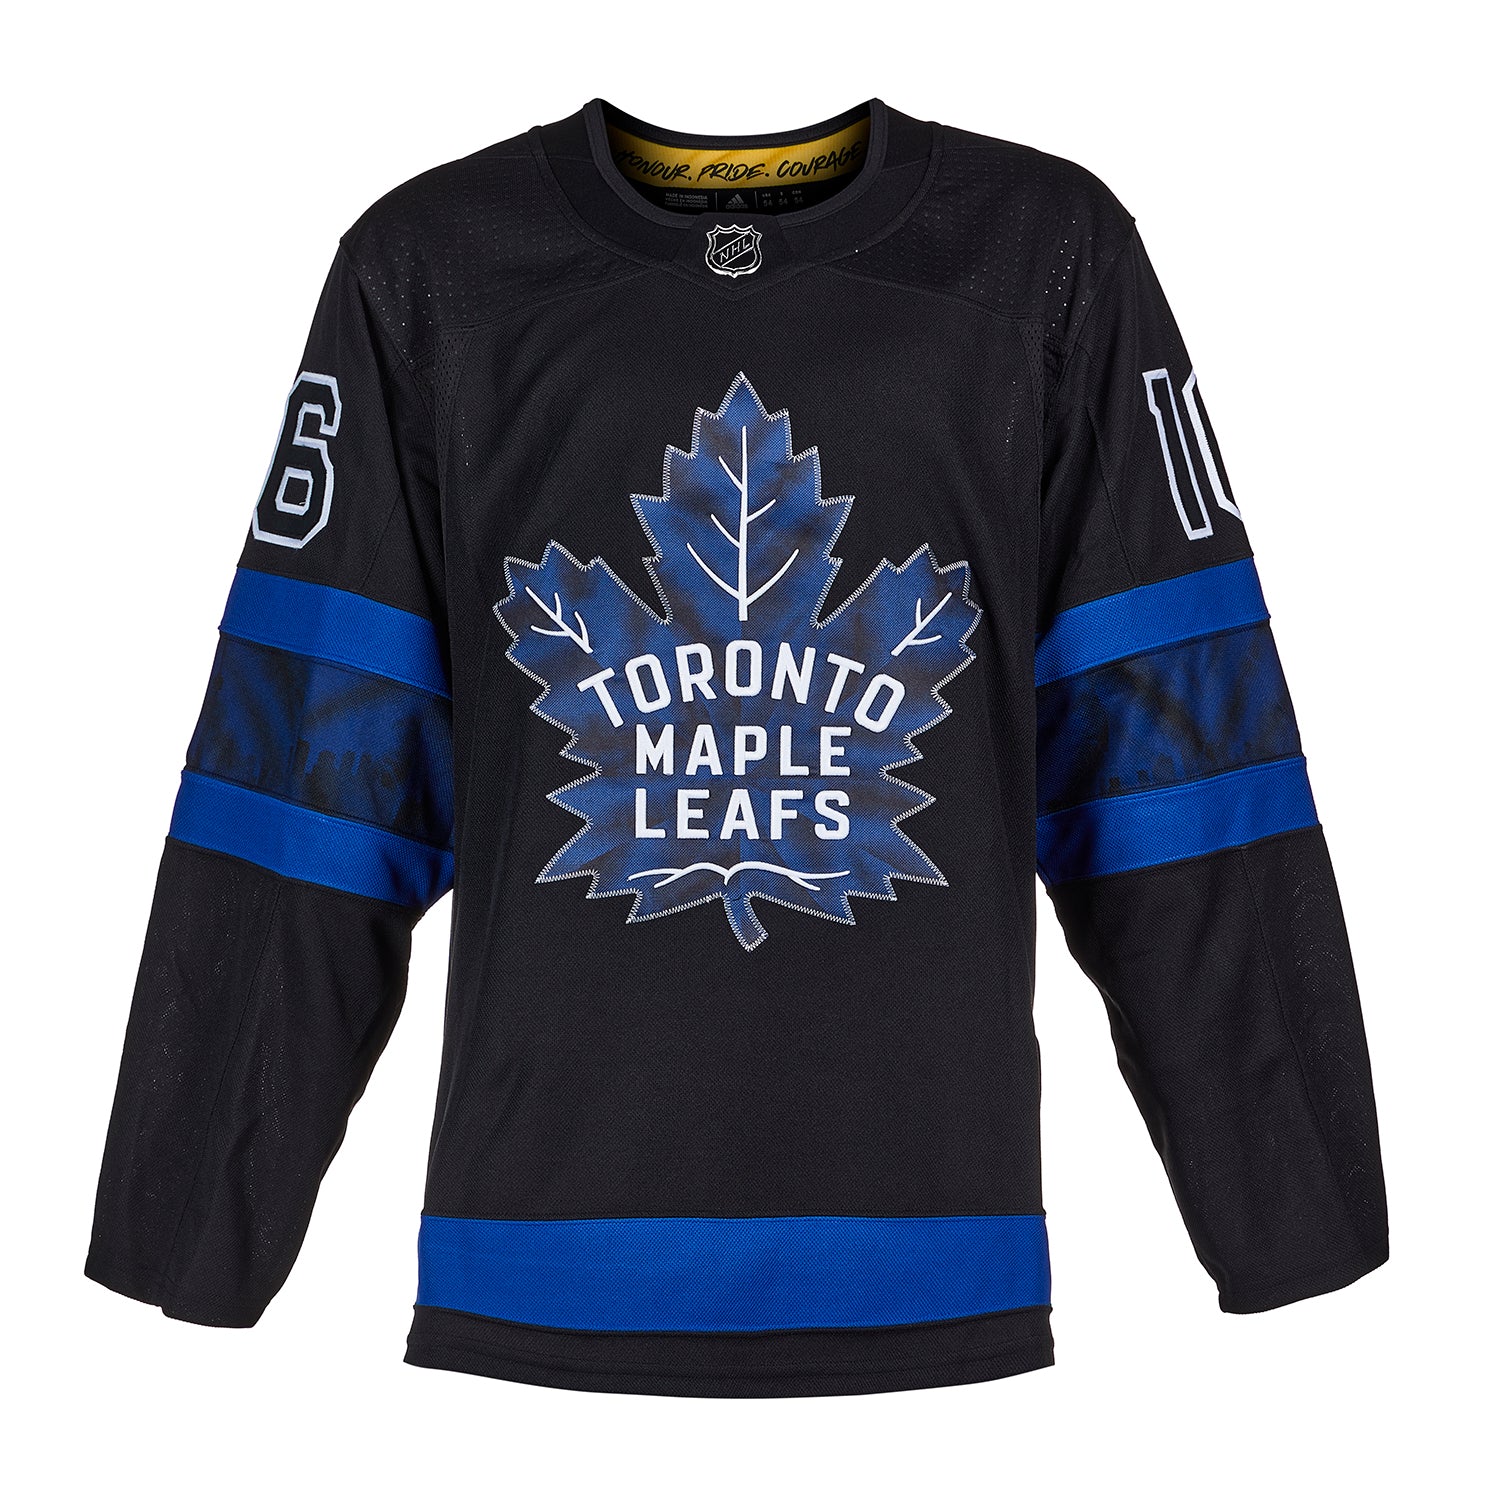 Mitch Marner Toronto Maple Leafs Reverse Retro Adidas Authentic